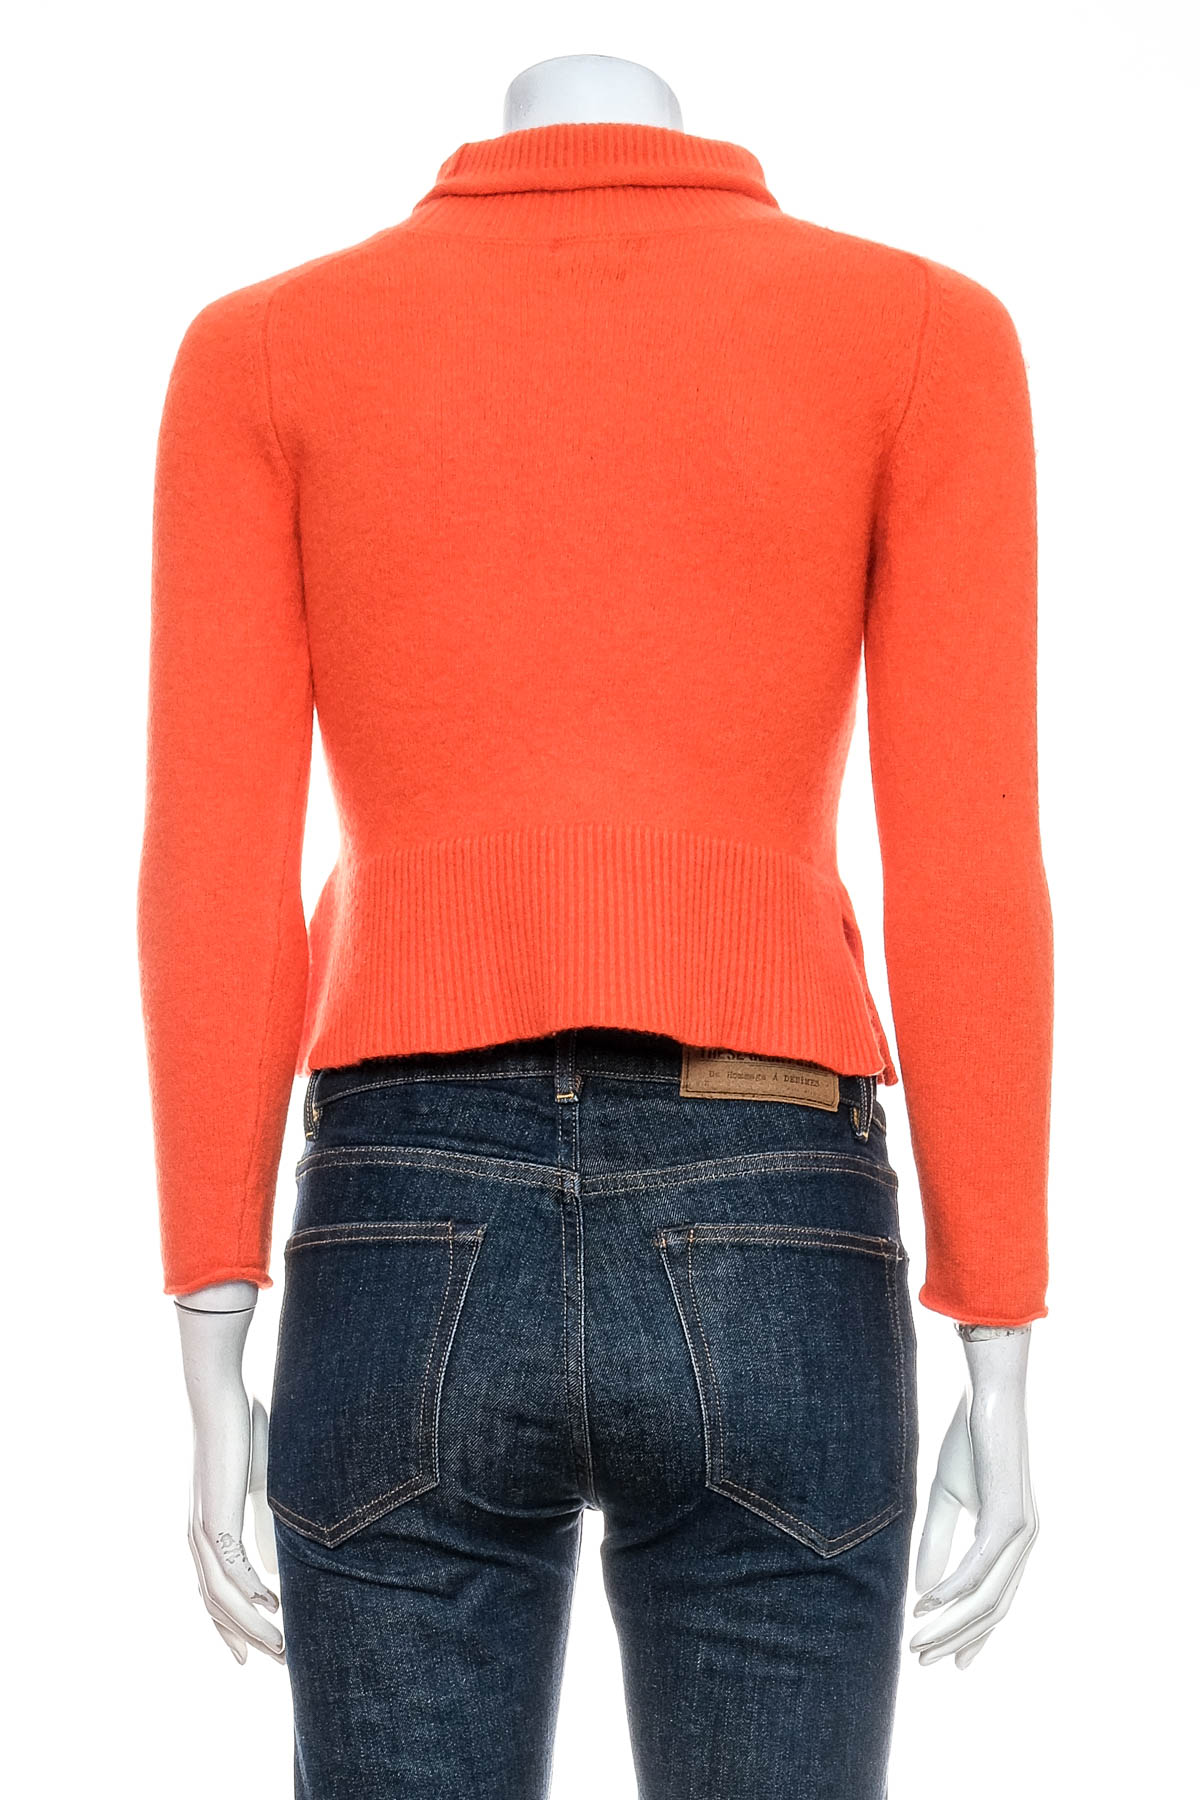 Women's sweater - Massimo Dutti - 1